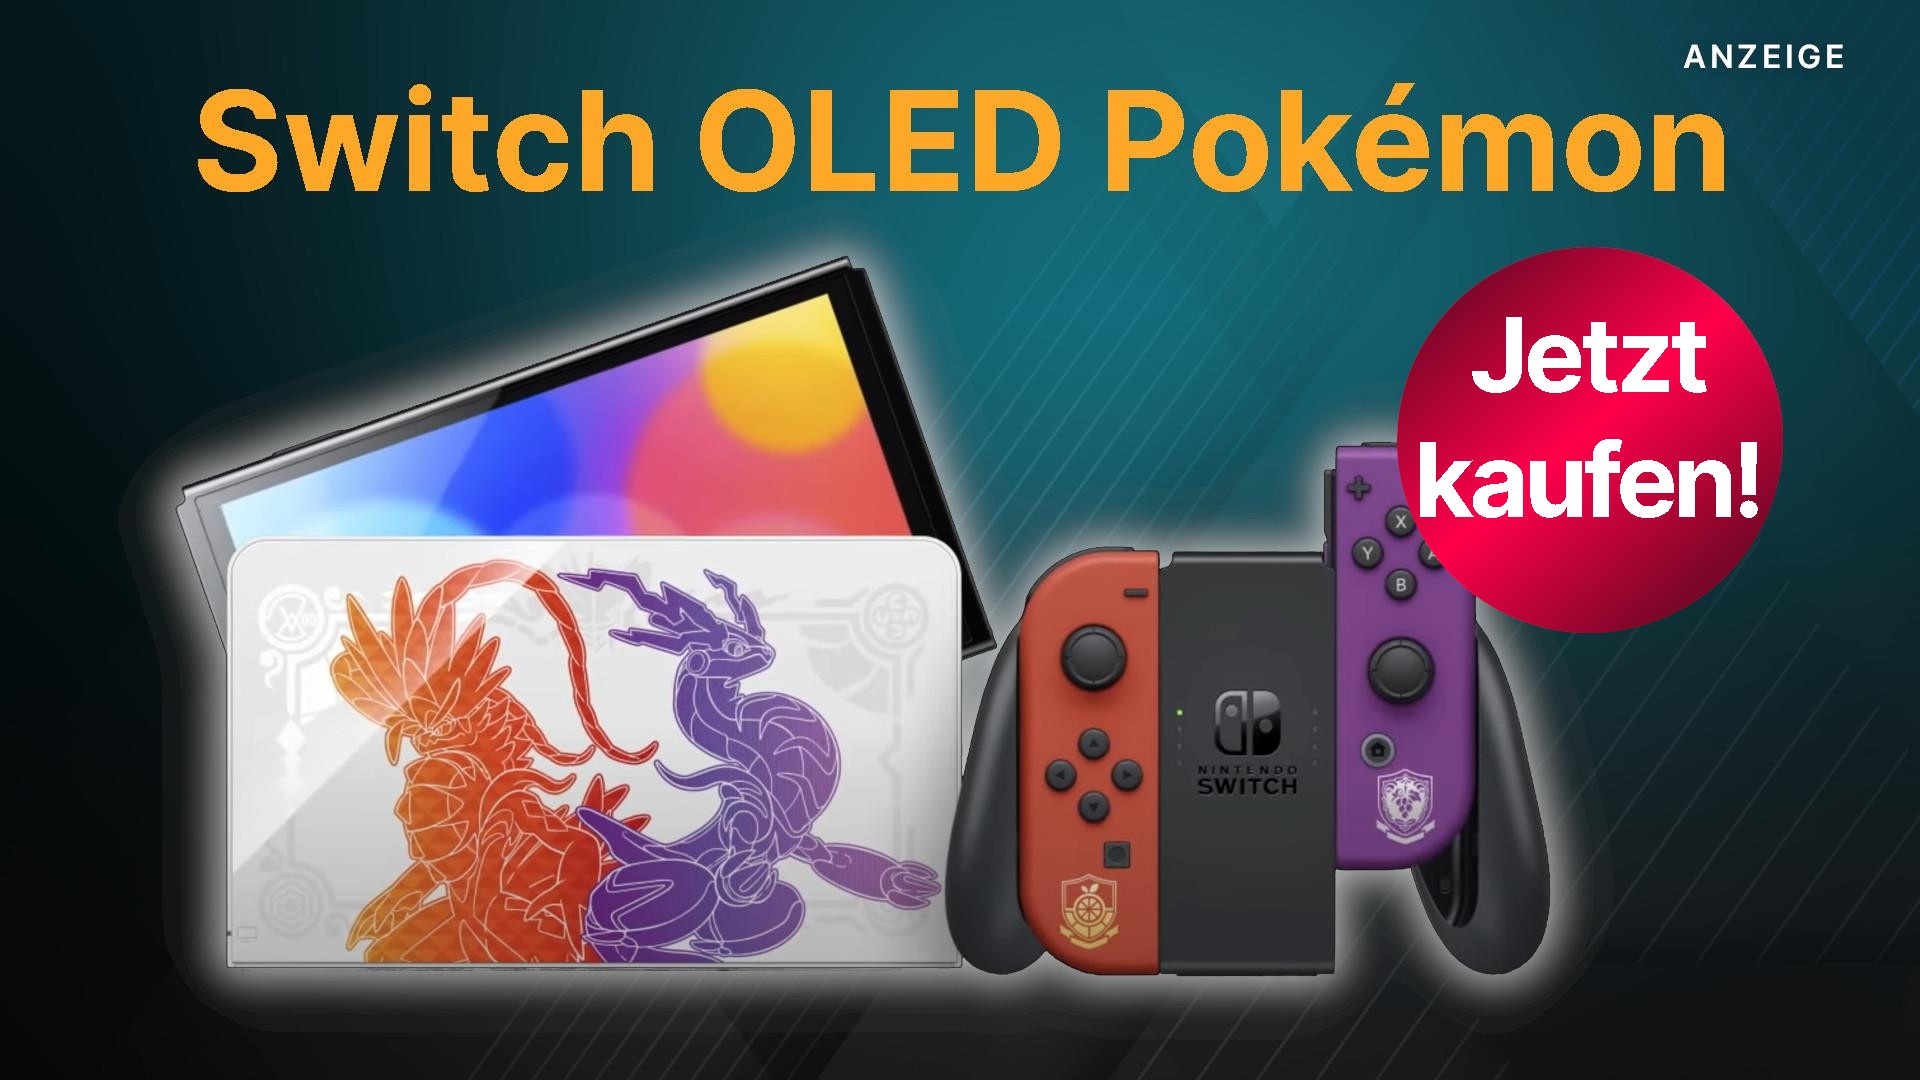 Switch OLED: Pokémon Purpur & Amazon Edition jetzt kaufen Karmesin bei Special